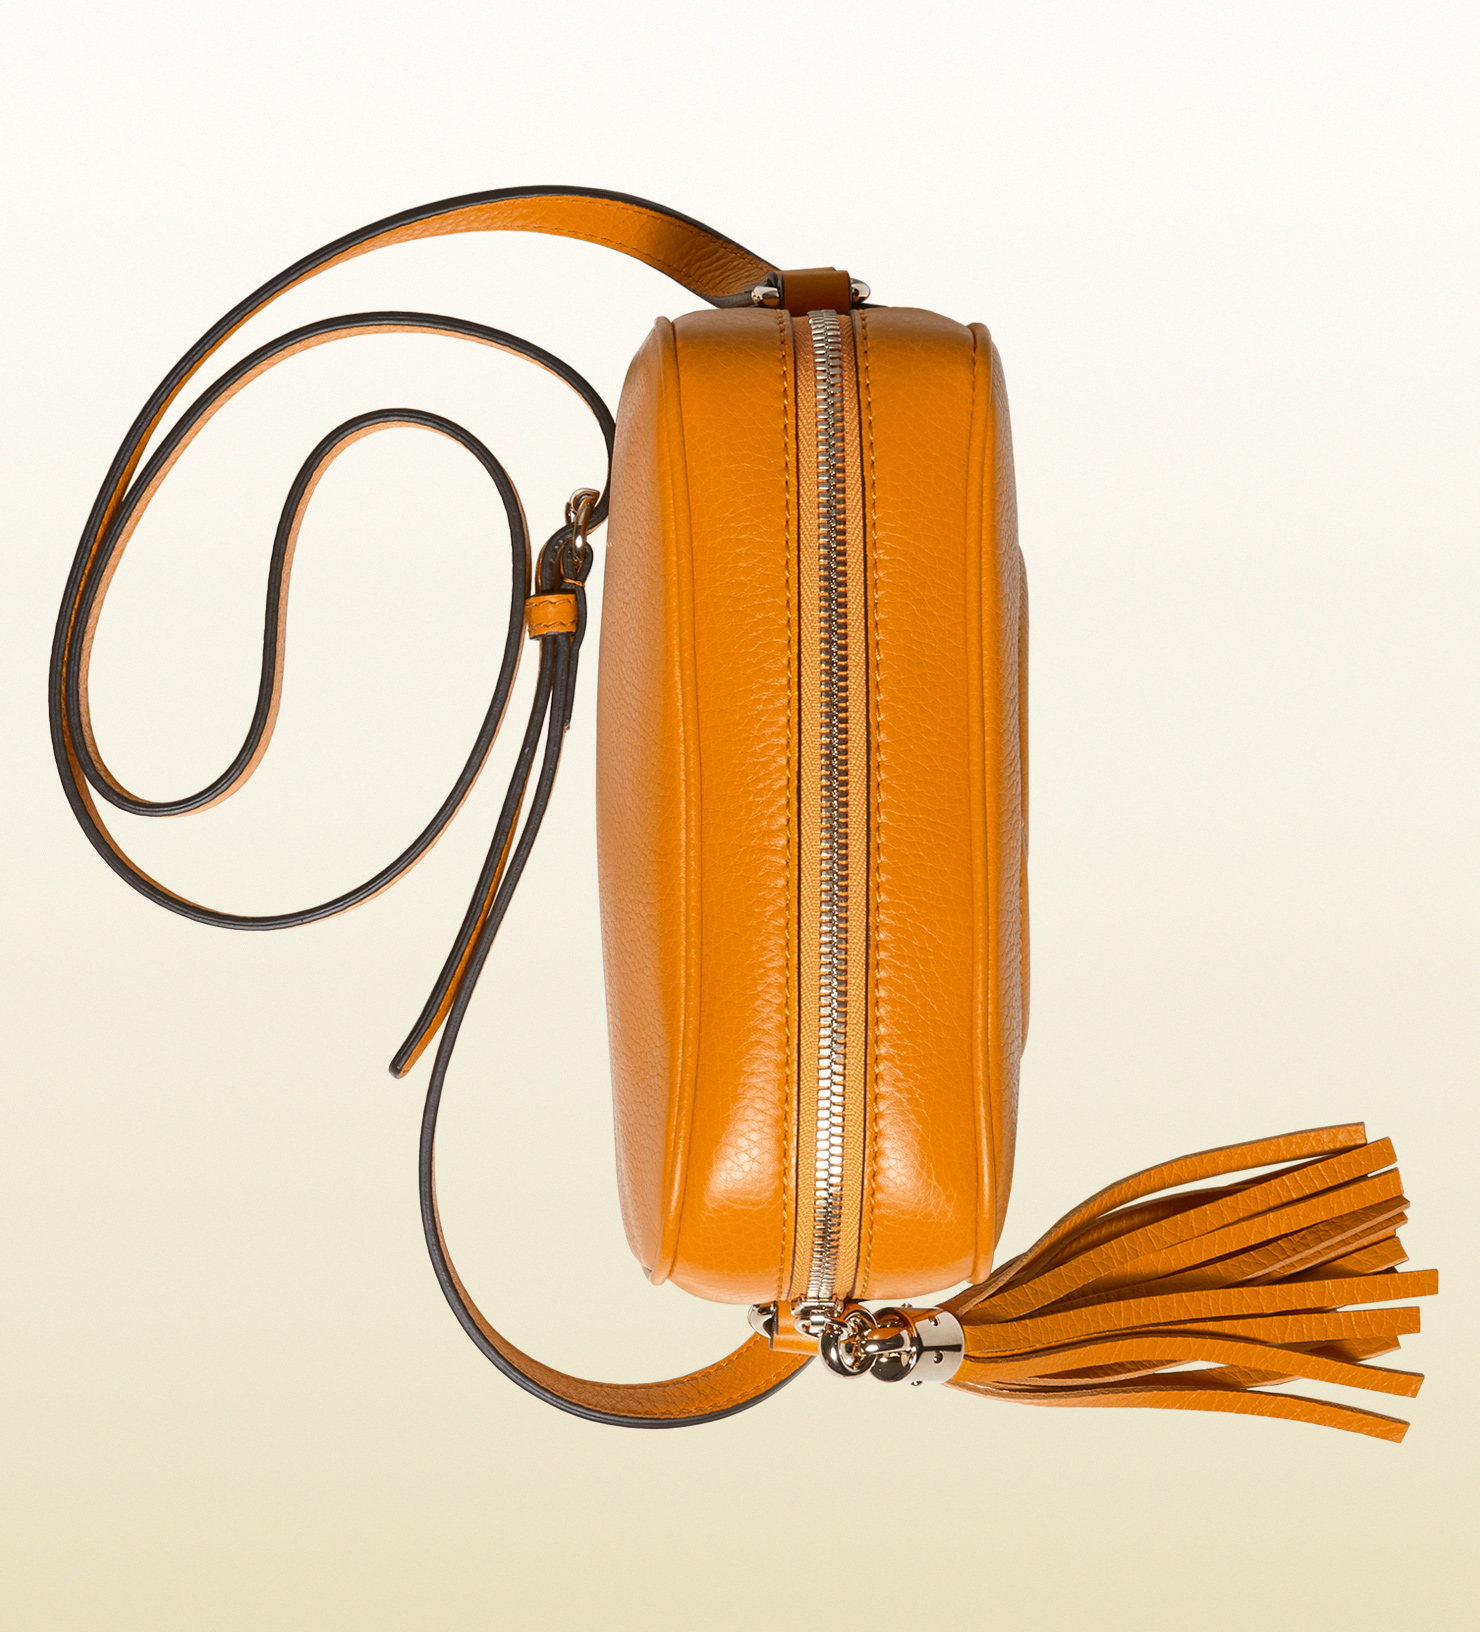 Lyst - Gucci Soho Leather Disco Bag in Orange